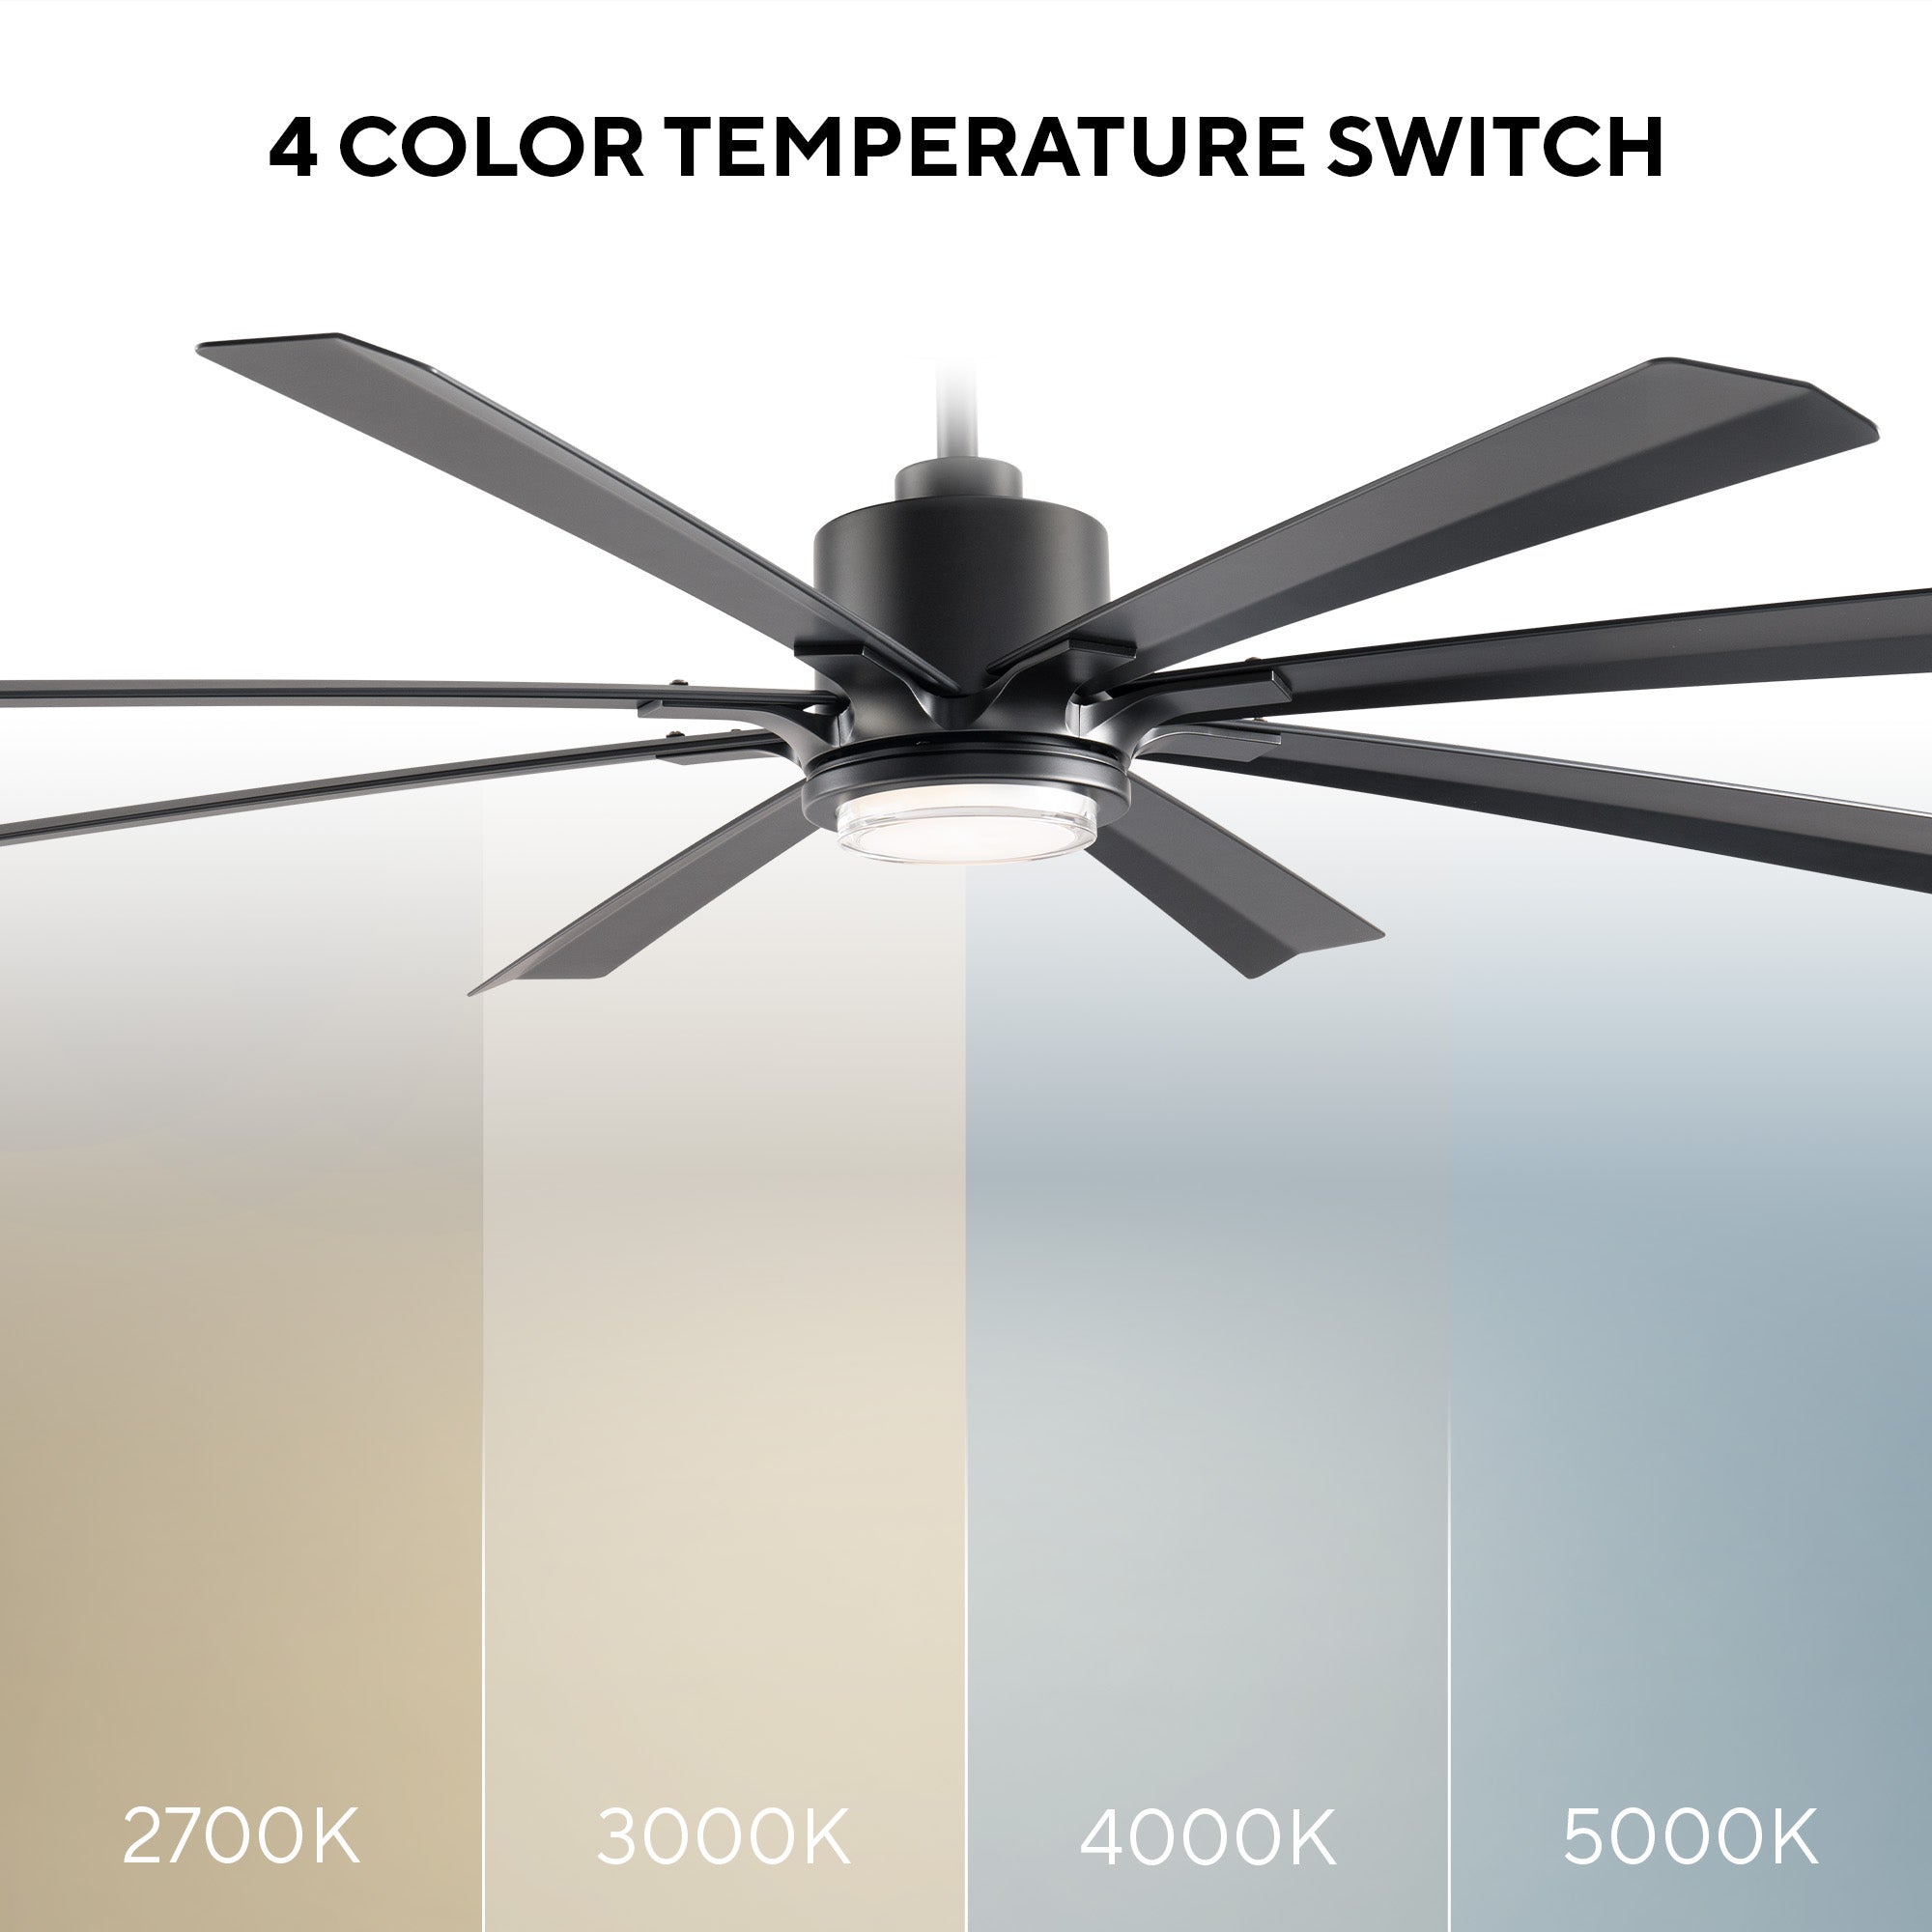 Size Matters Indoor/Outdoor 8-Blade 65" LED Smart Ceiling Fan